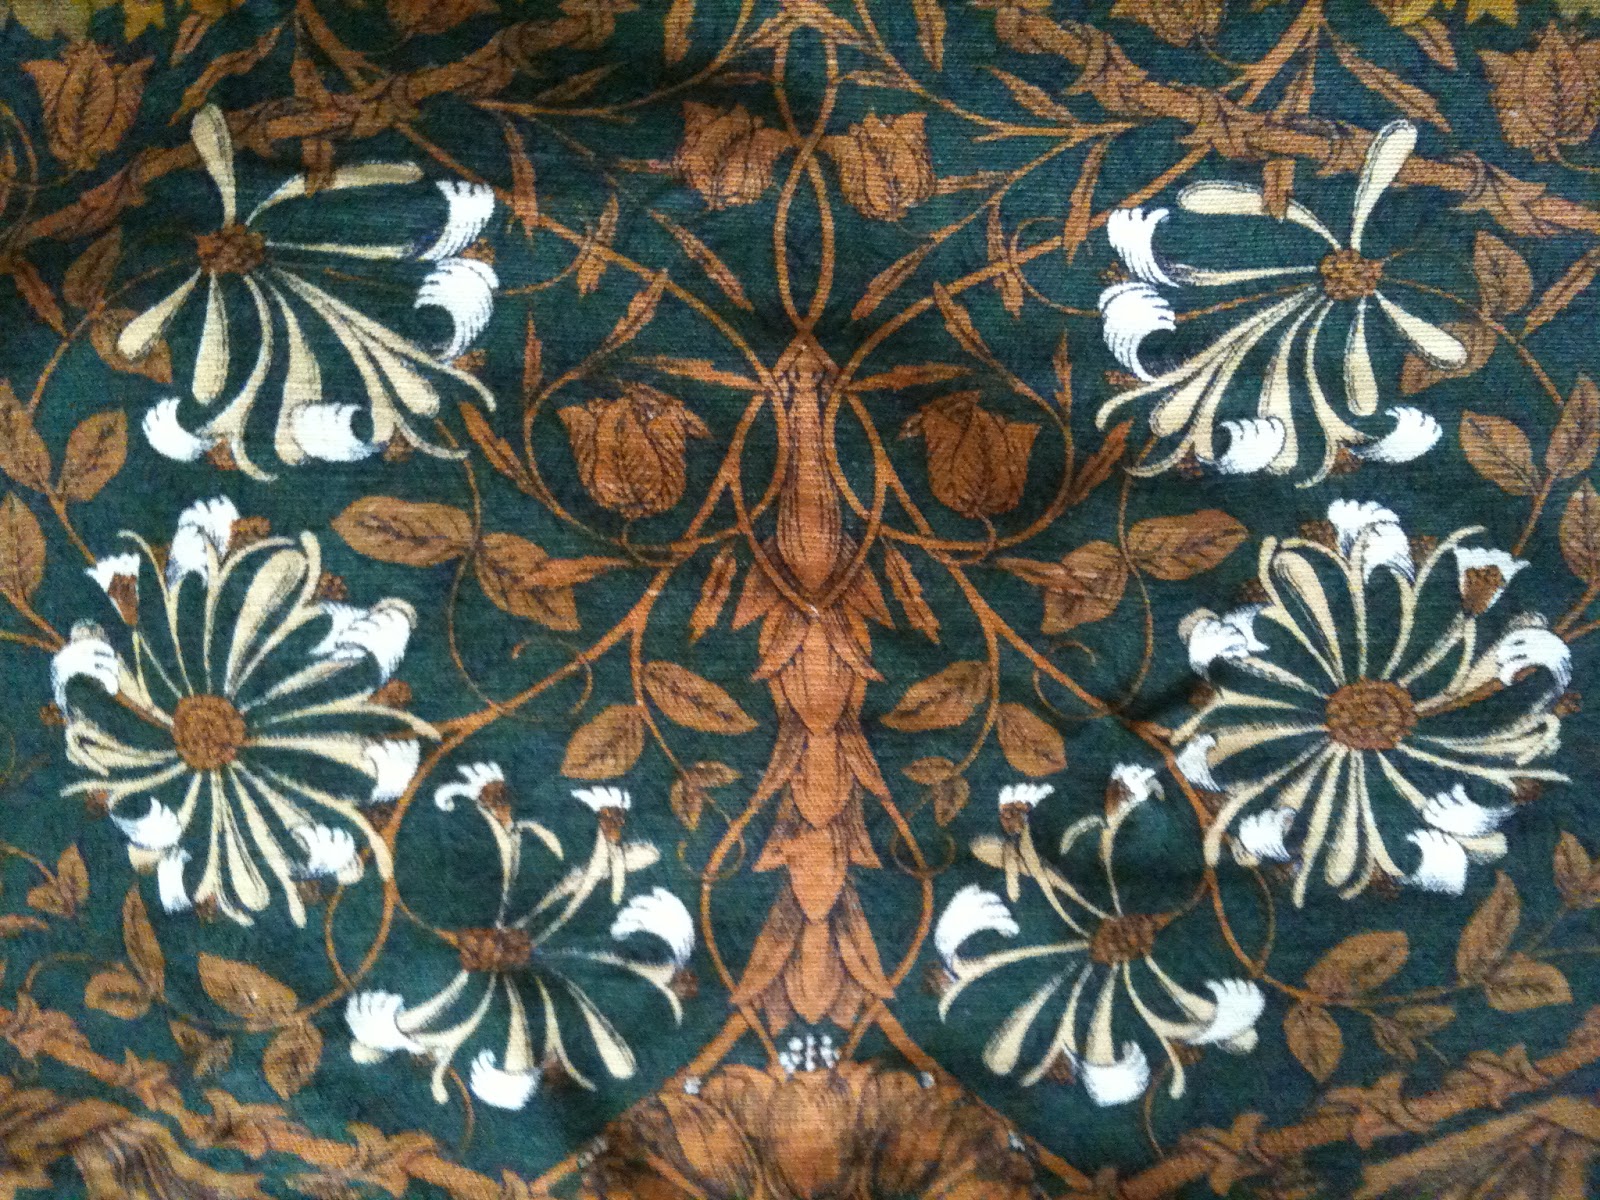 Honeysuckle Wallpaper - William Morris | Flowers and art